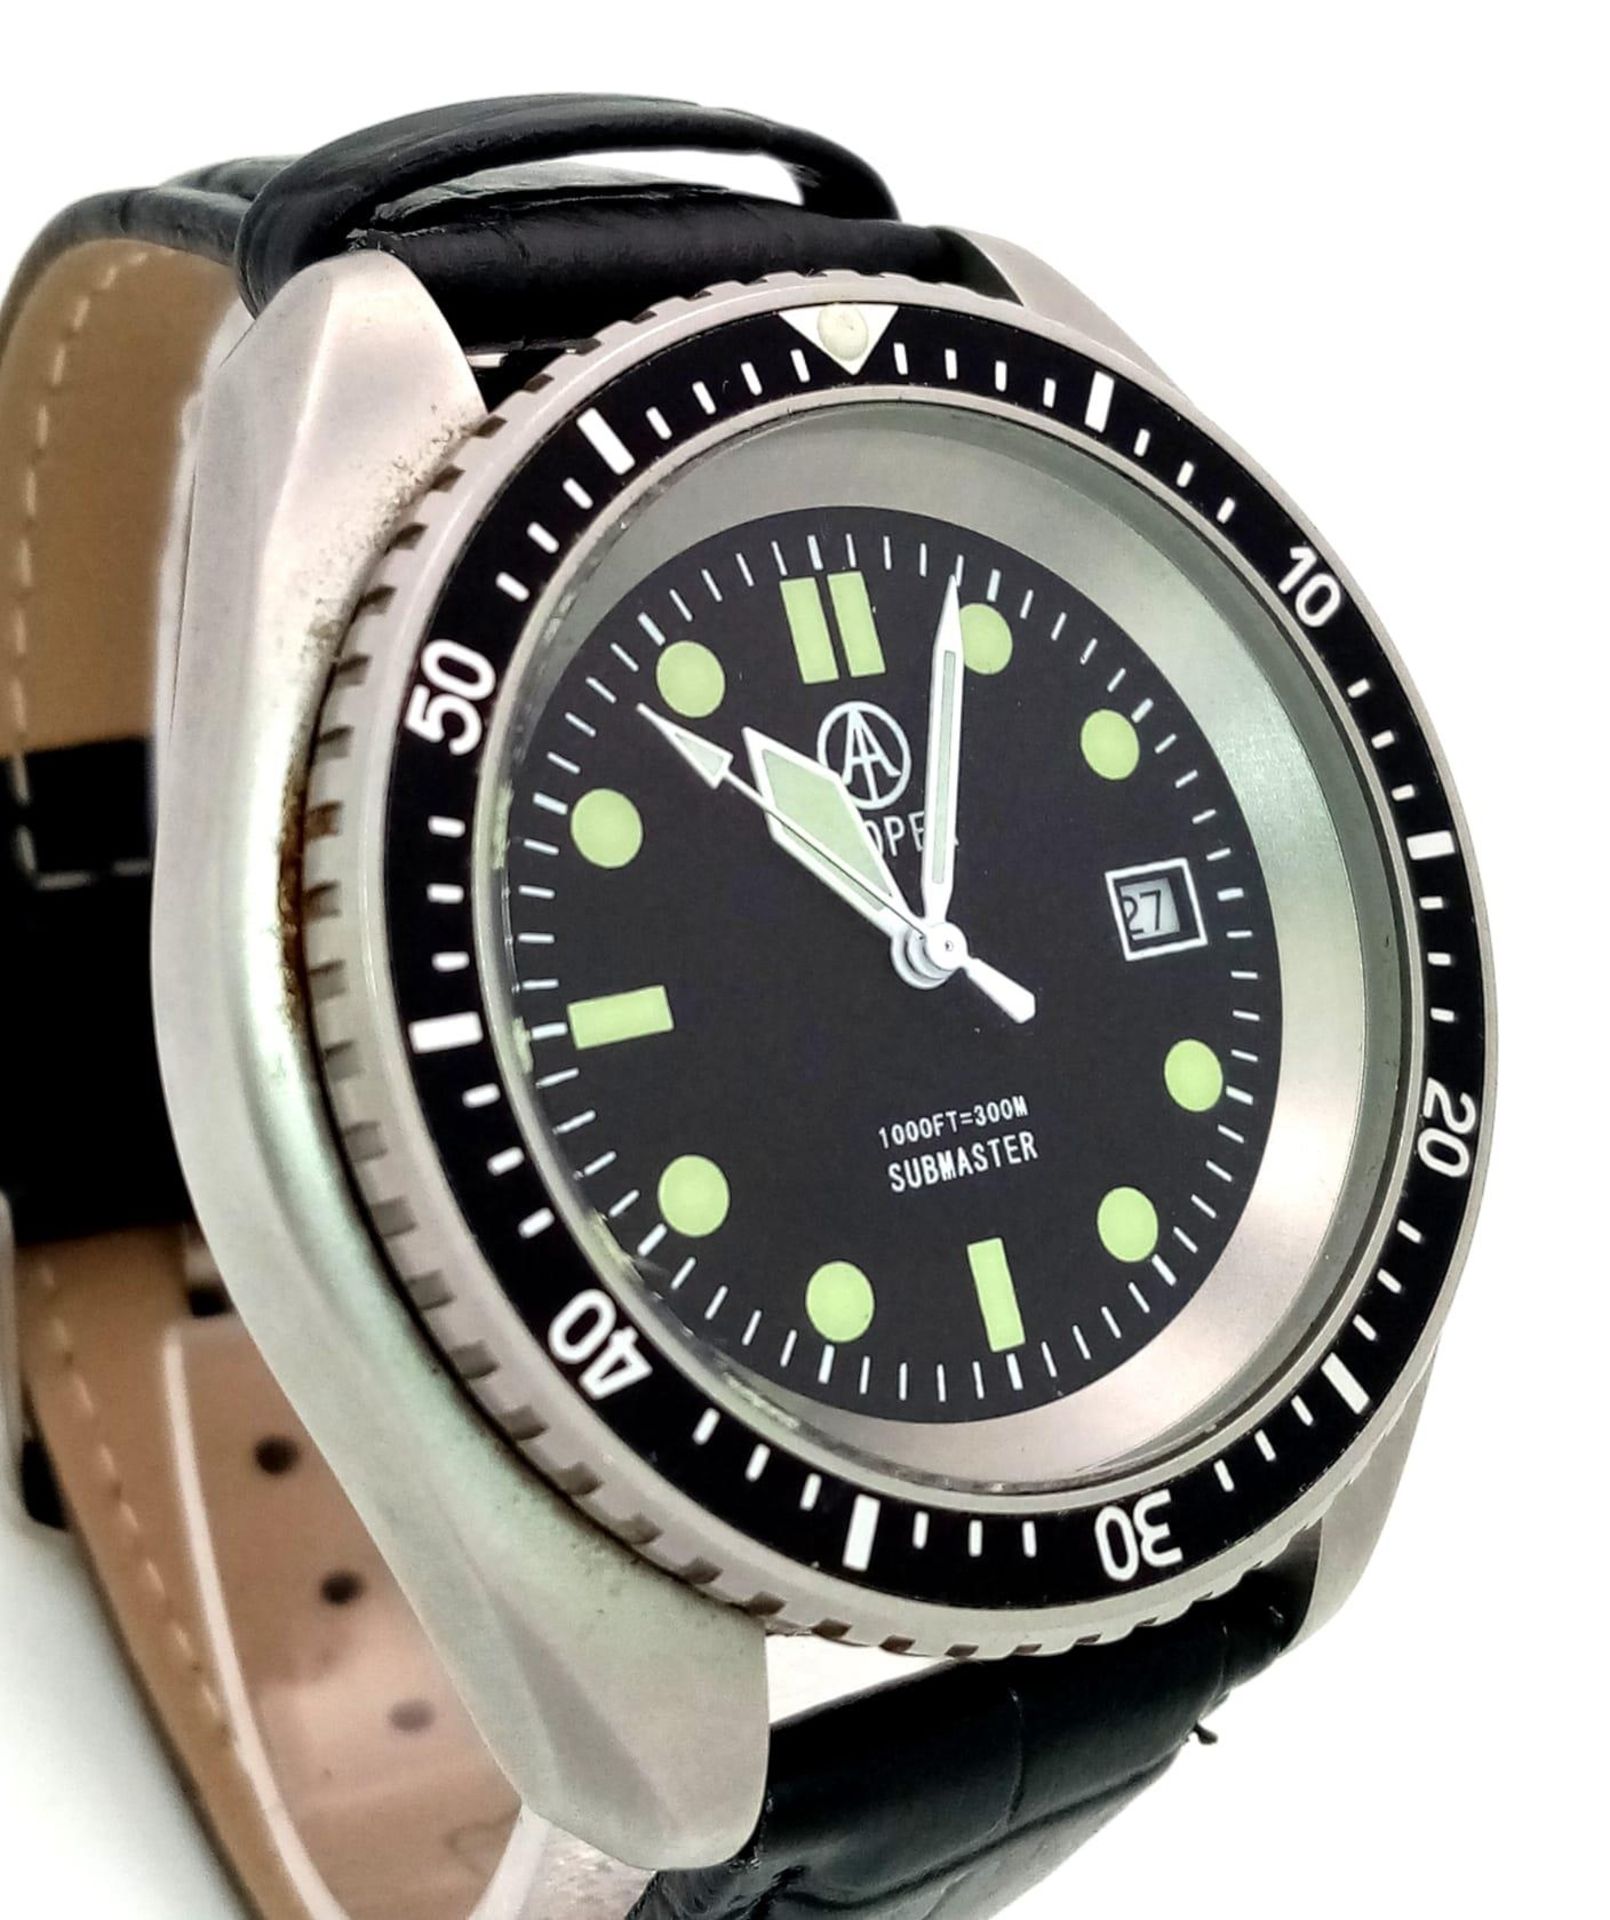 A Cooper Submaster Quartz Divers Watch. Black leather strap. Stainless steel case - 43mm. Black dial - Bild 3 aus 5